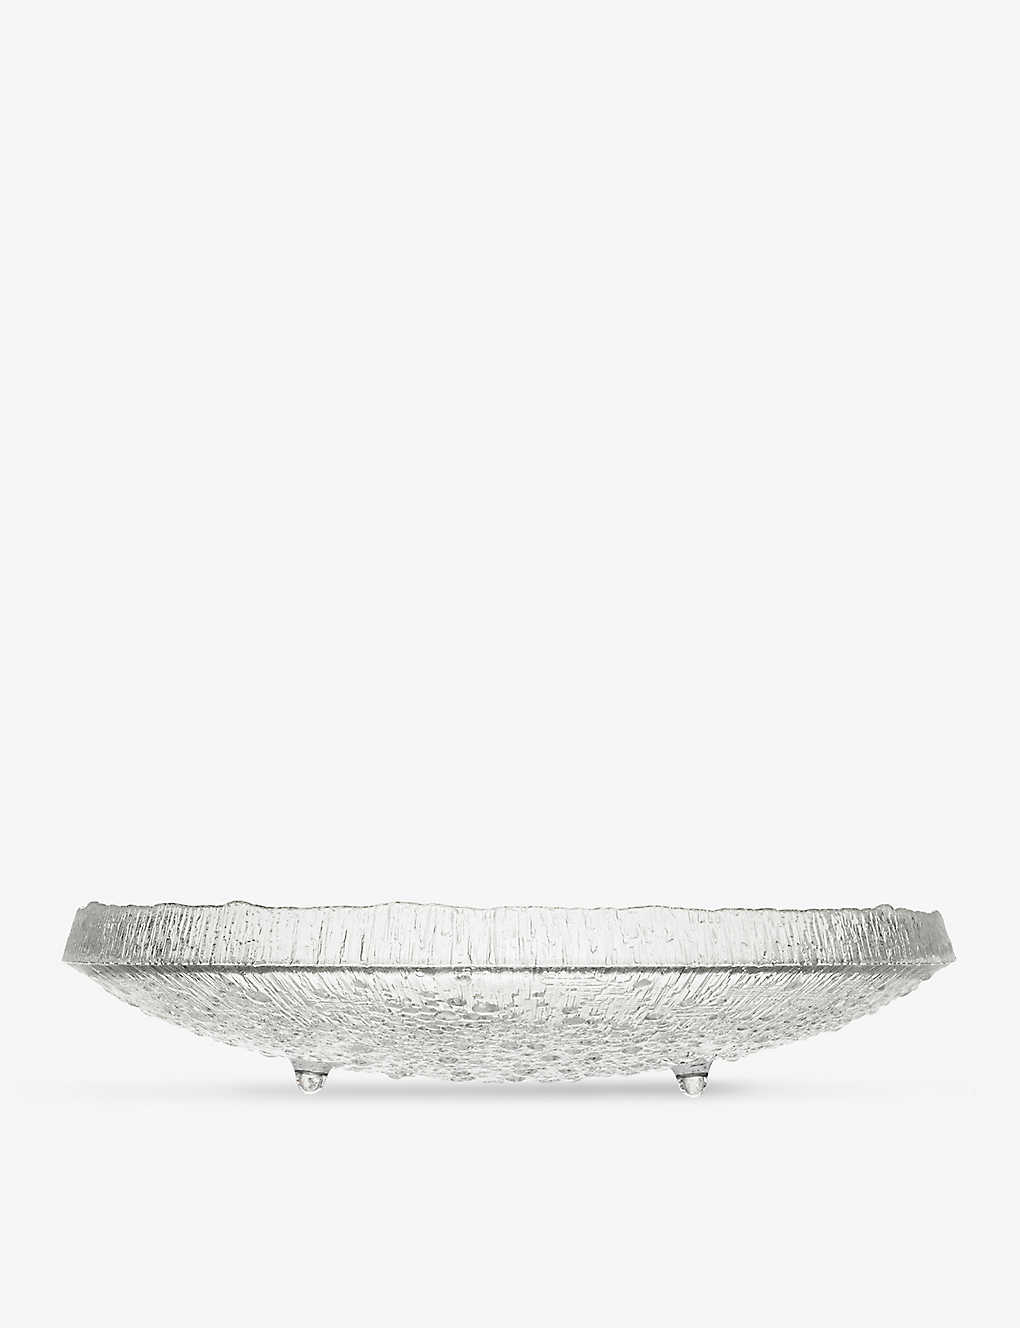 Iittala Ultima Thule Centerpiece Bowl In Nocolor